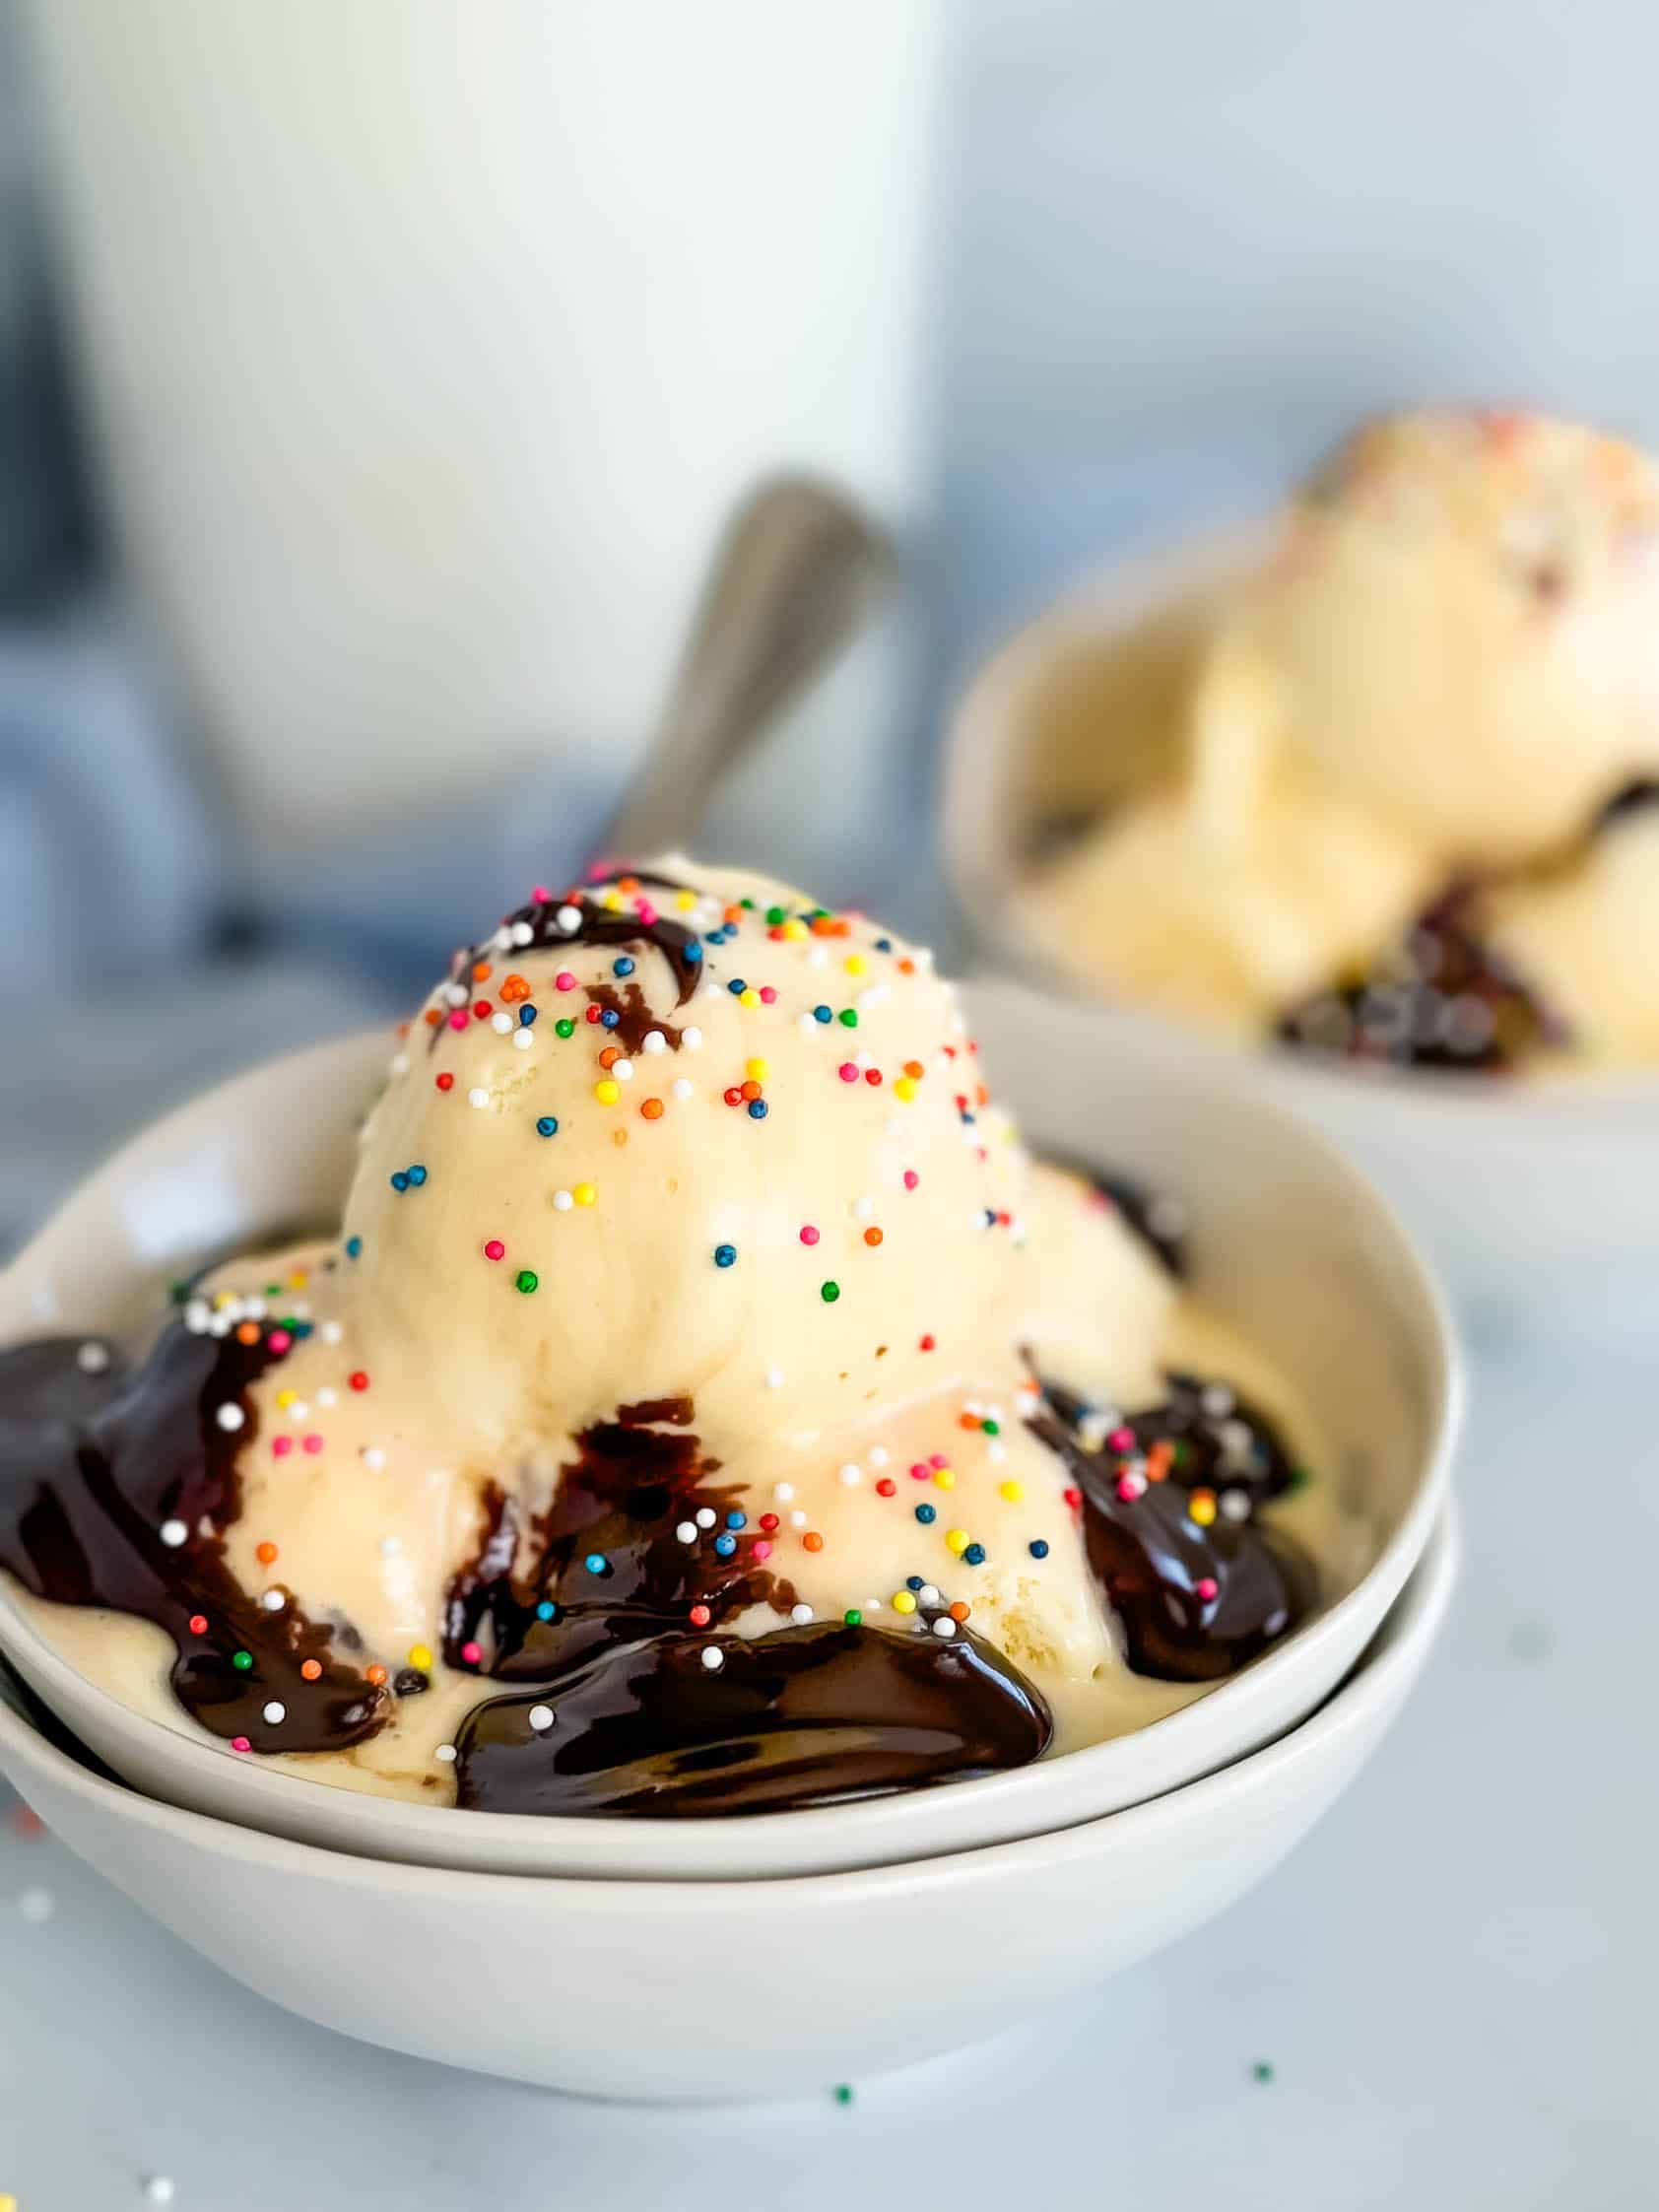 Homemade vanilla ice cream with sprinkles.